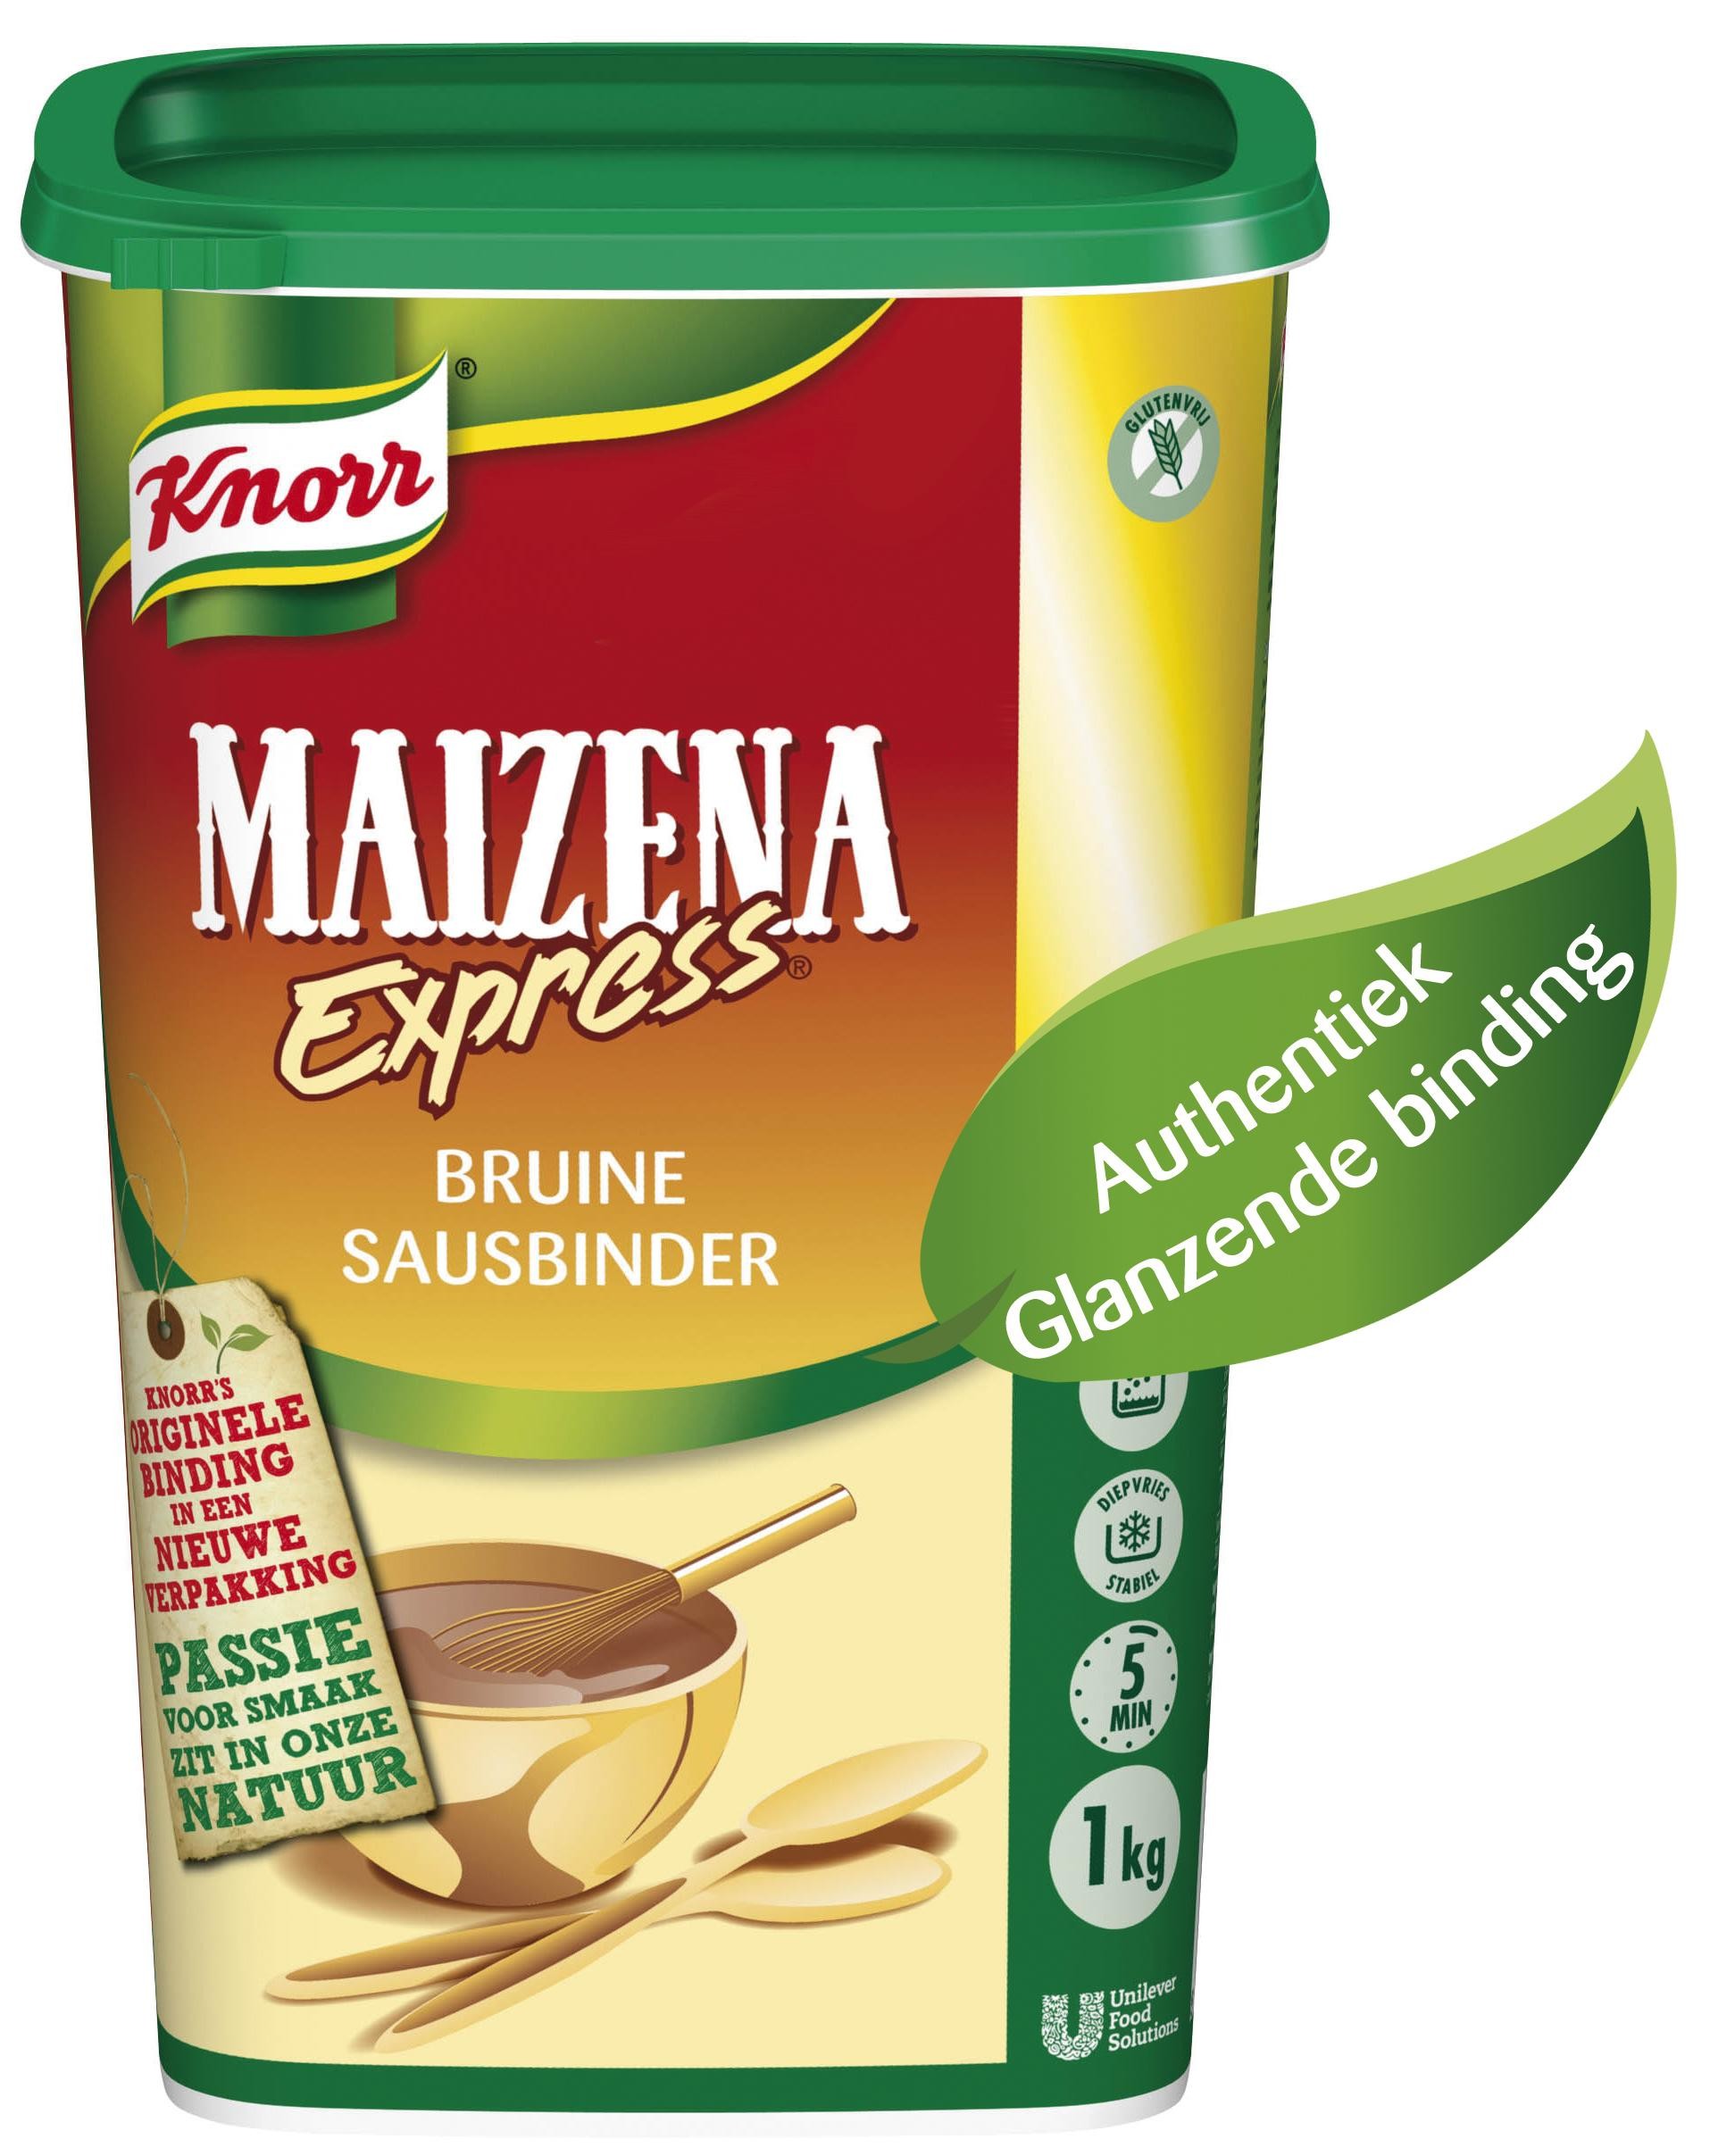 Maizena express donker 1kg bruine sausbinder